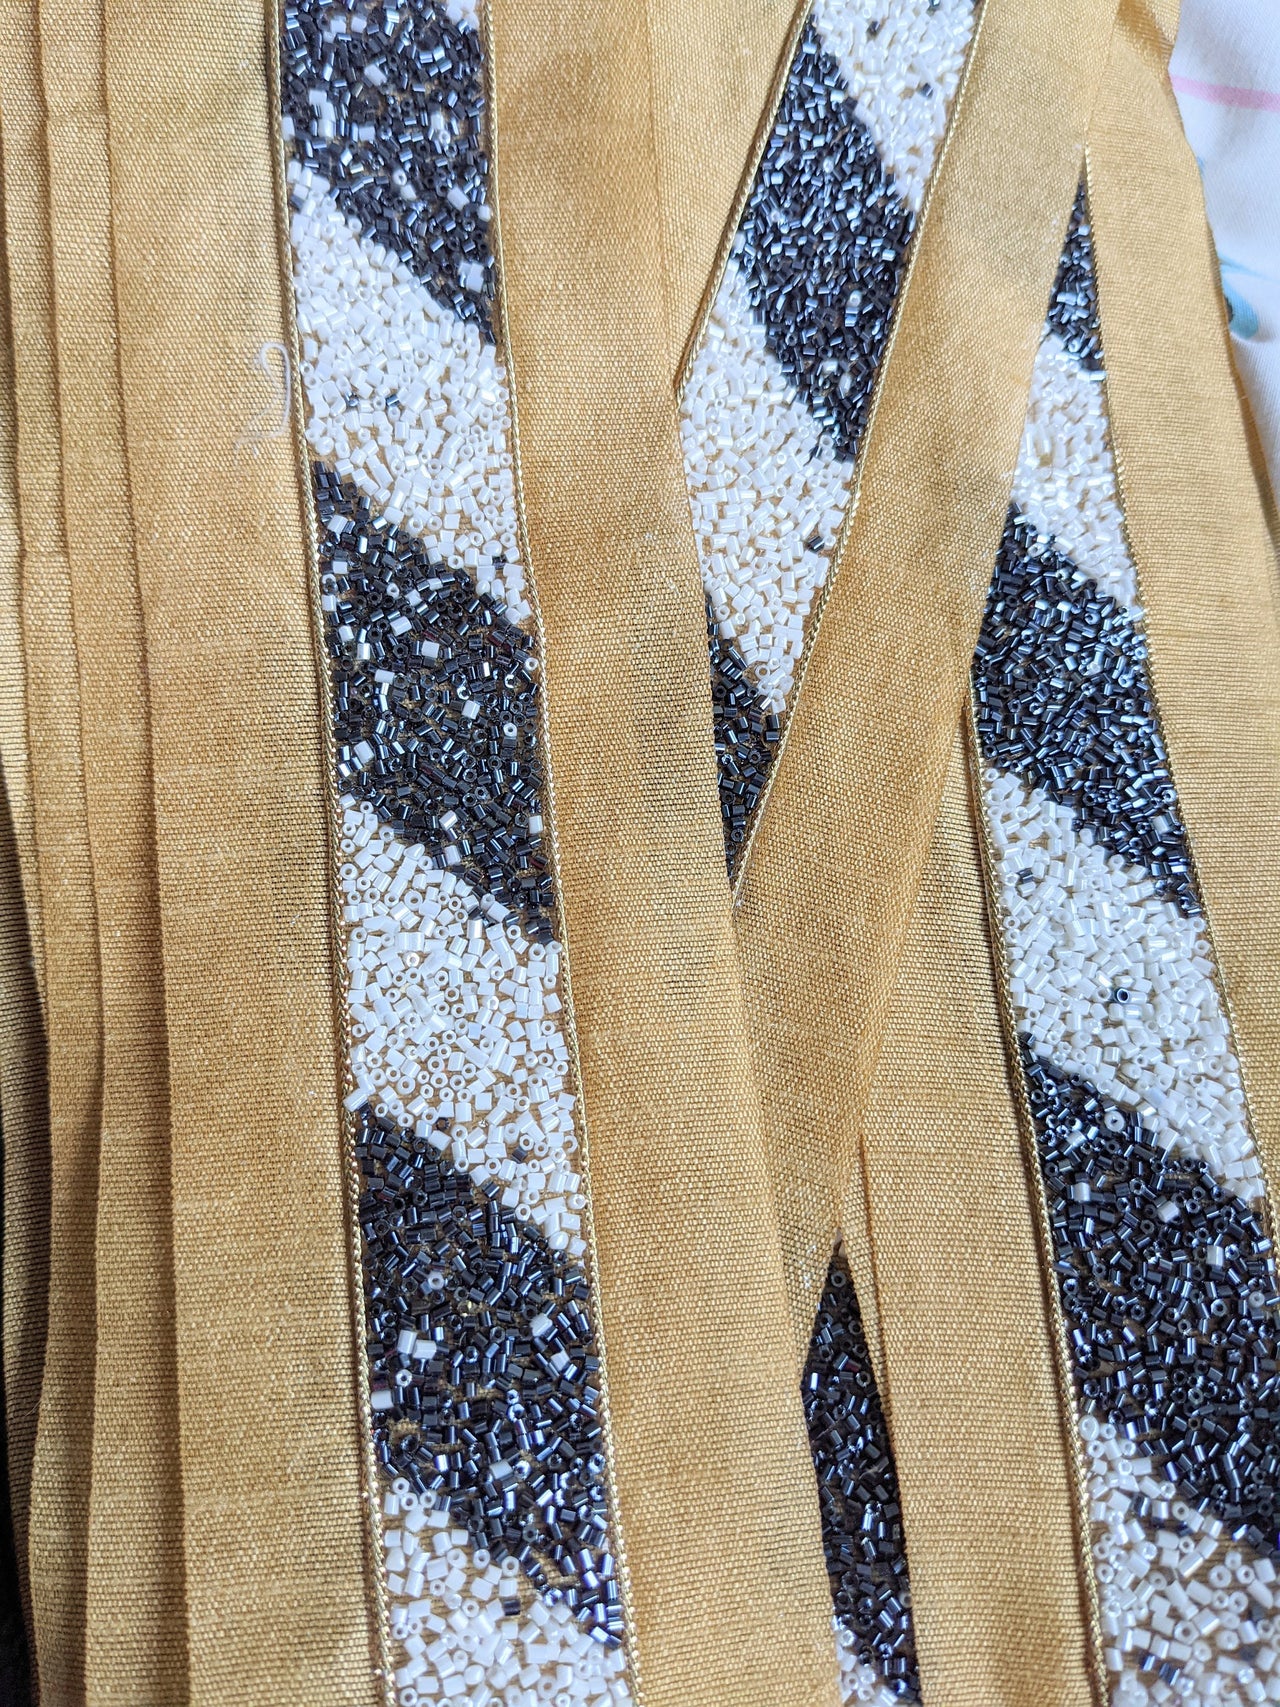 Beige Fabric Trim With White And Metallic Grey Bugle Beads Embellishments, Beaded Trim, Saree Border